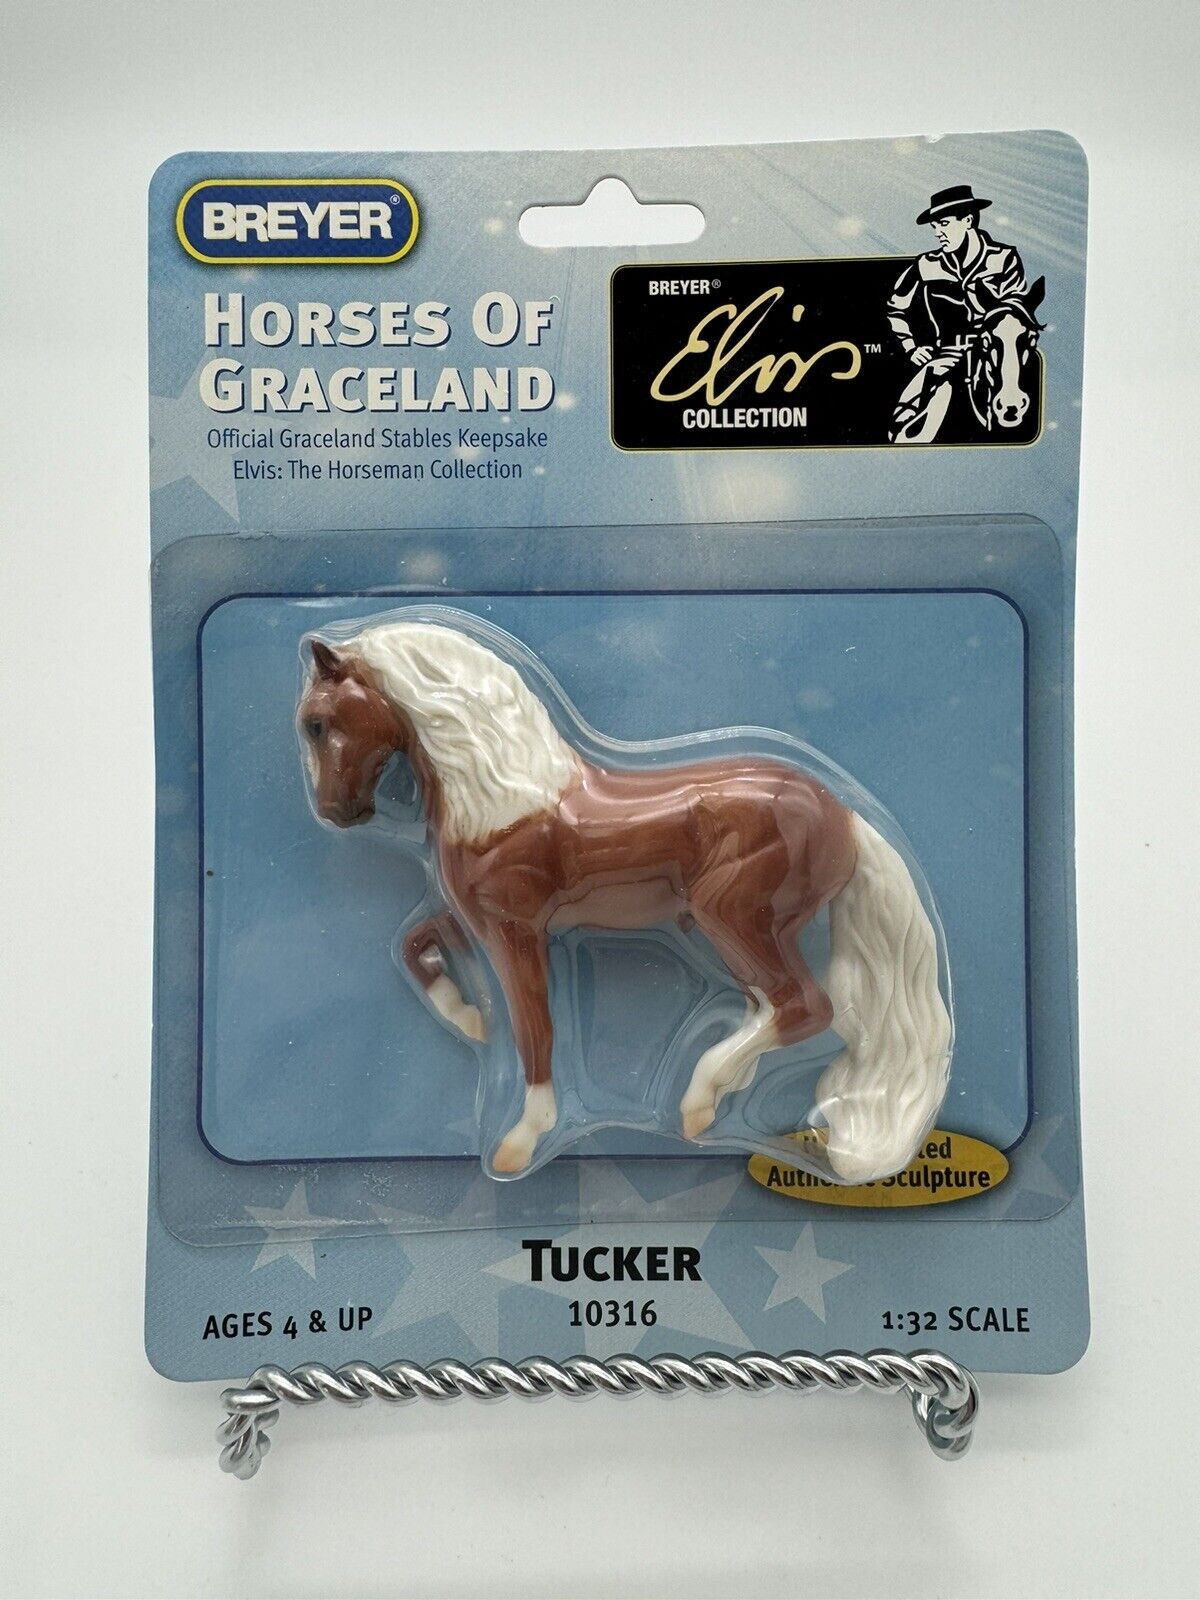 Breyer Elvis Collection Horses Of Graceland “Tucker” NIP